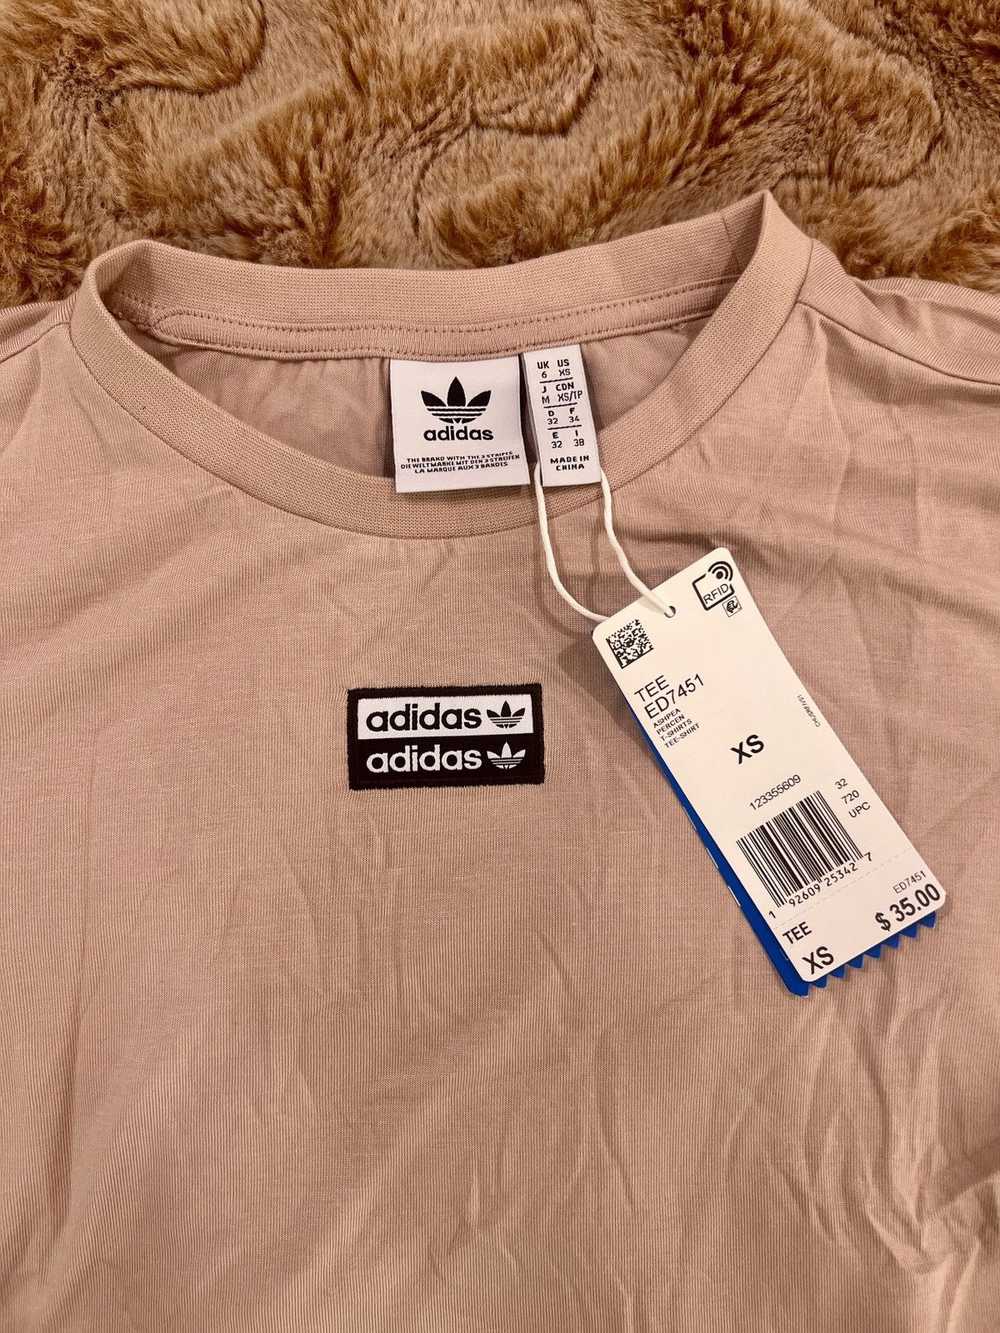 Adidas Adidas Originals RYV Cropped t-shirt in Be… - image 7